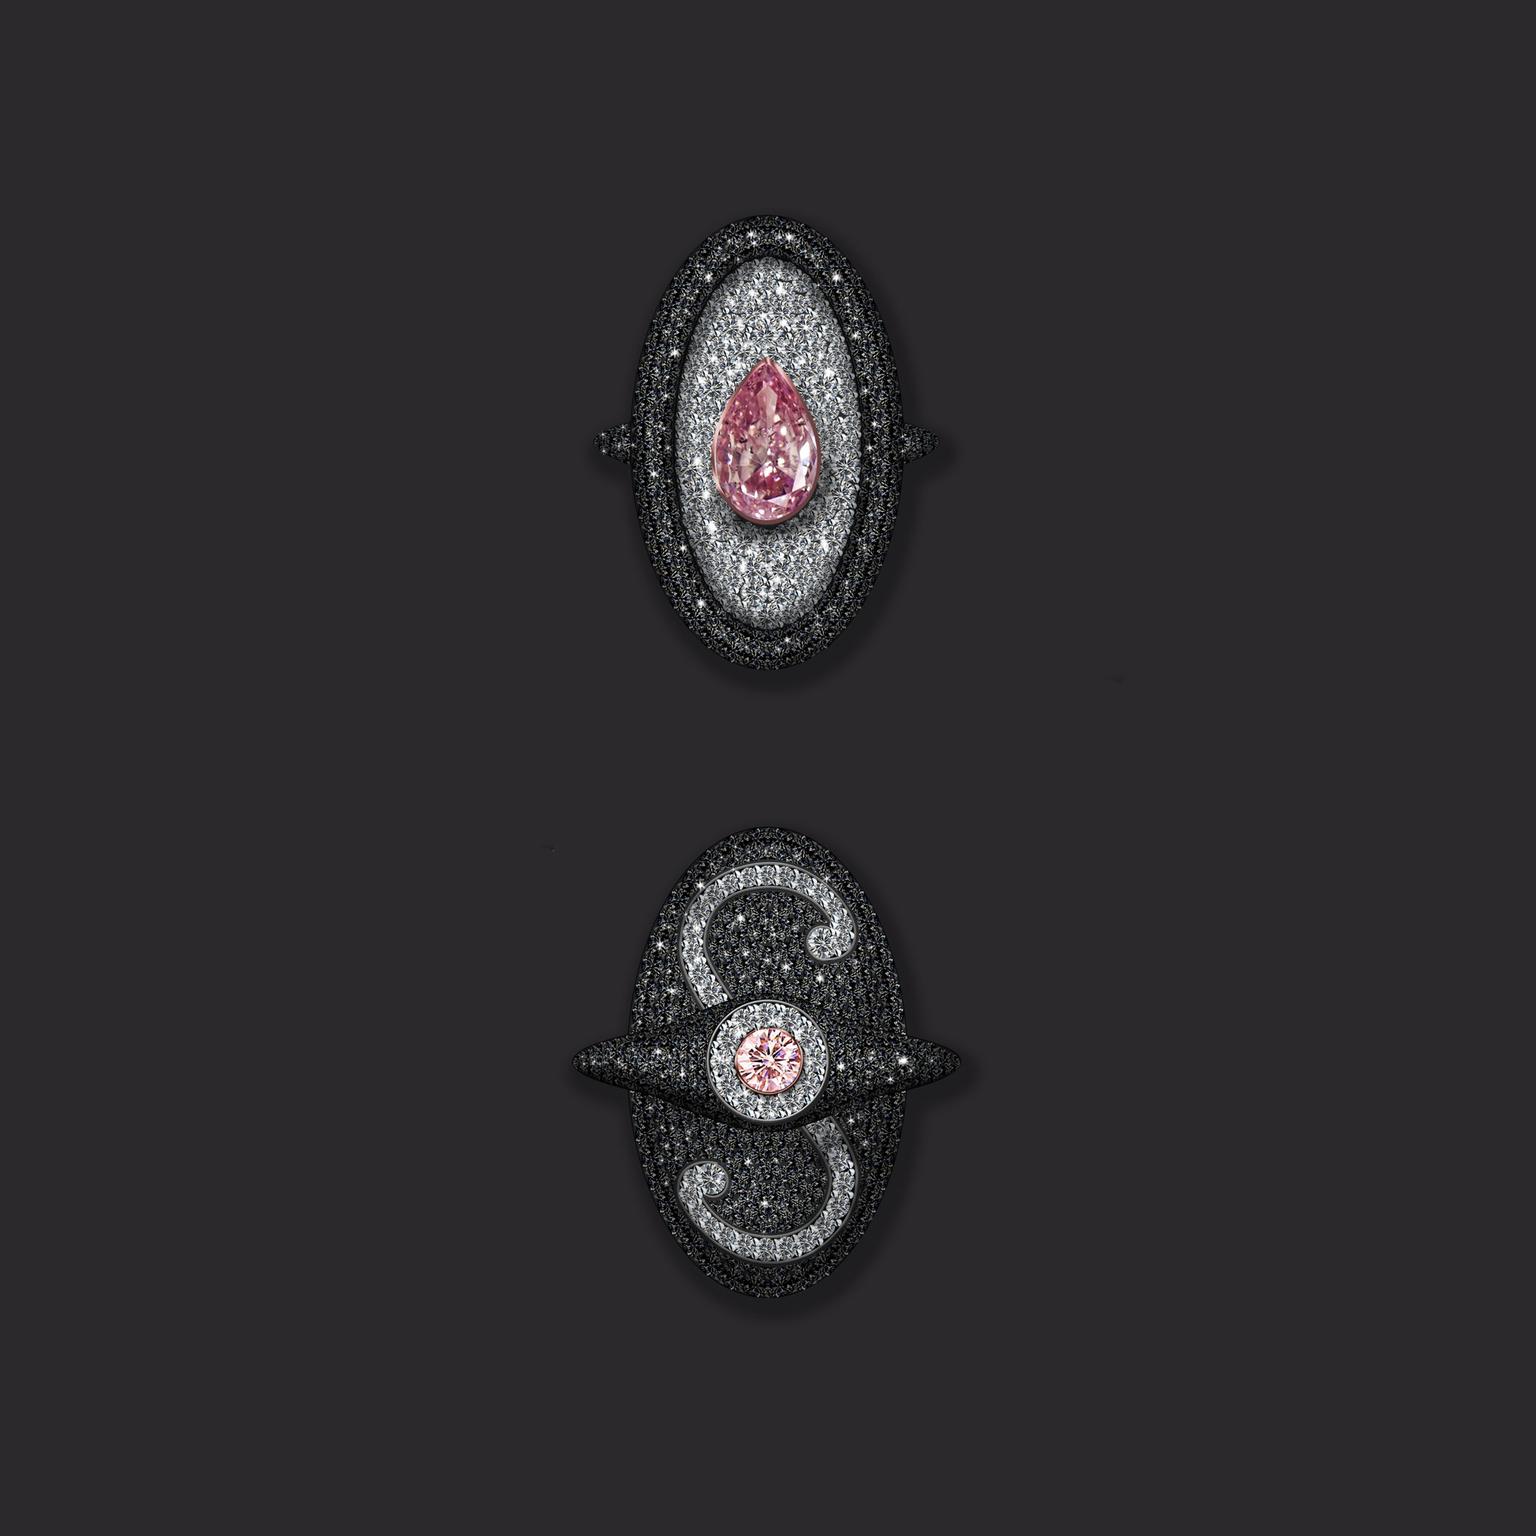 Maxim V pink diamond ring with black and white diamond pave